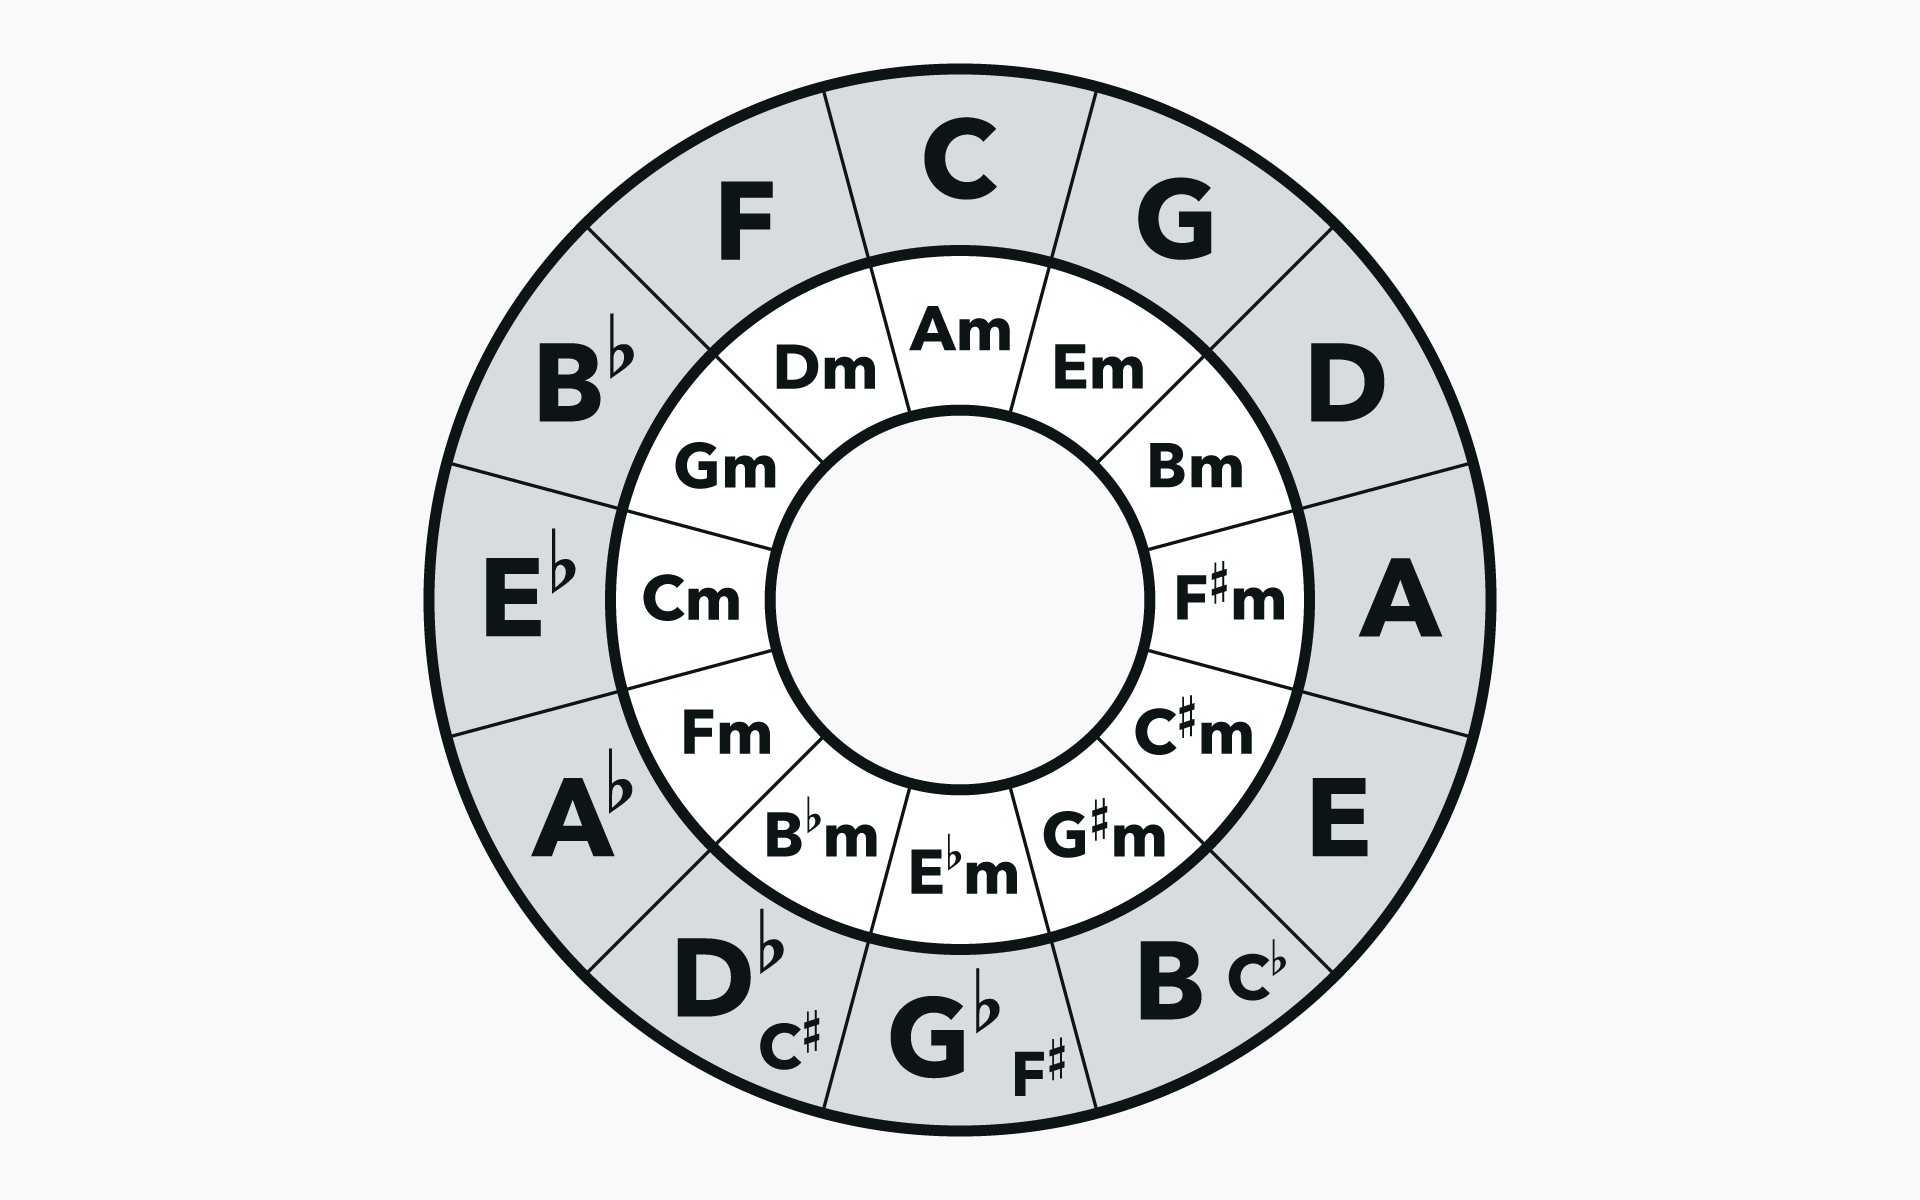 Circle of Fifths: The Key to Unlocking Harmonic Understanding